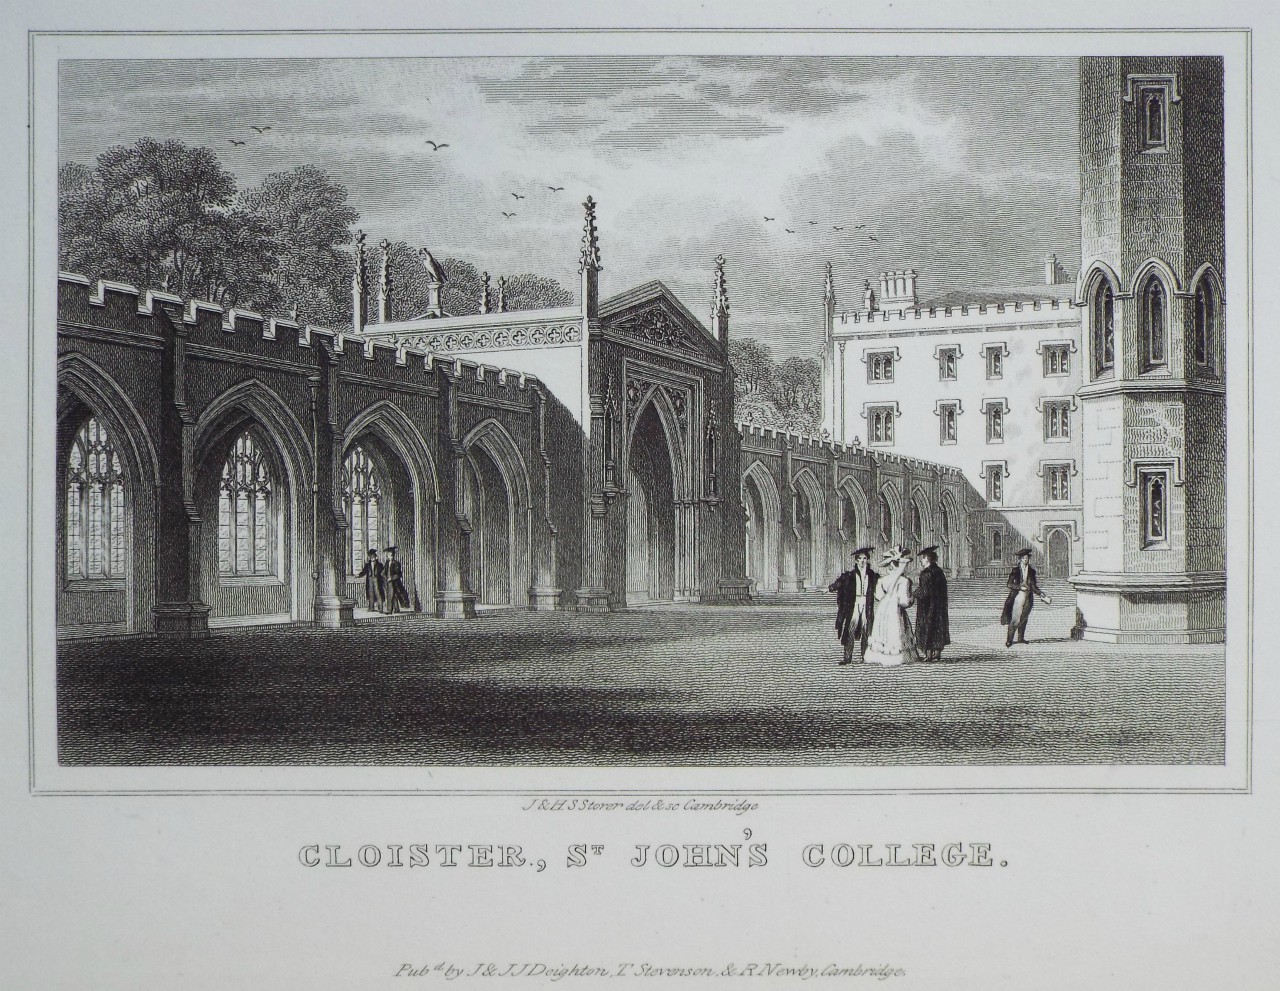 Print - Cloisters, St. John's College. - Storer